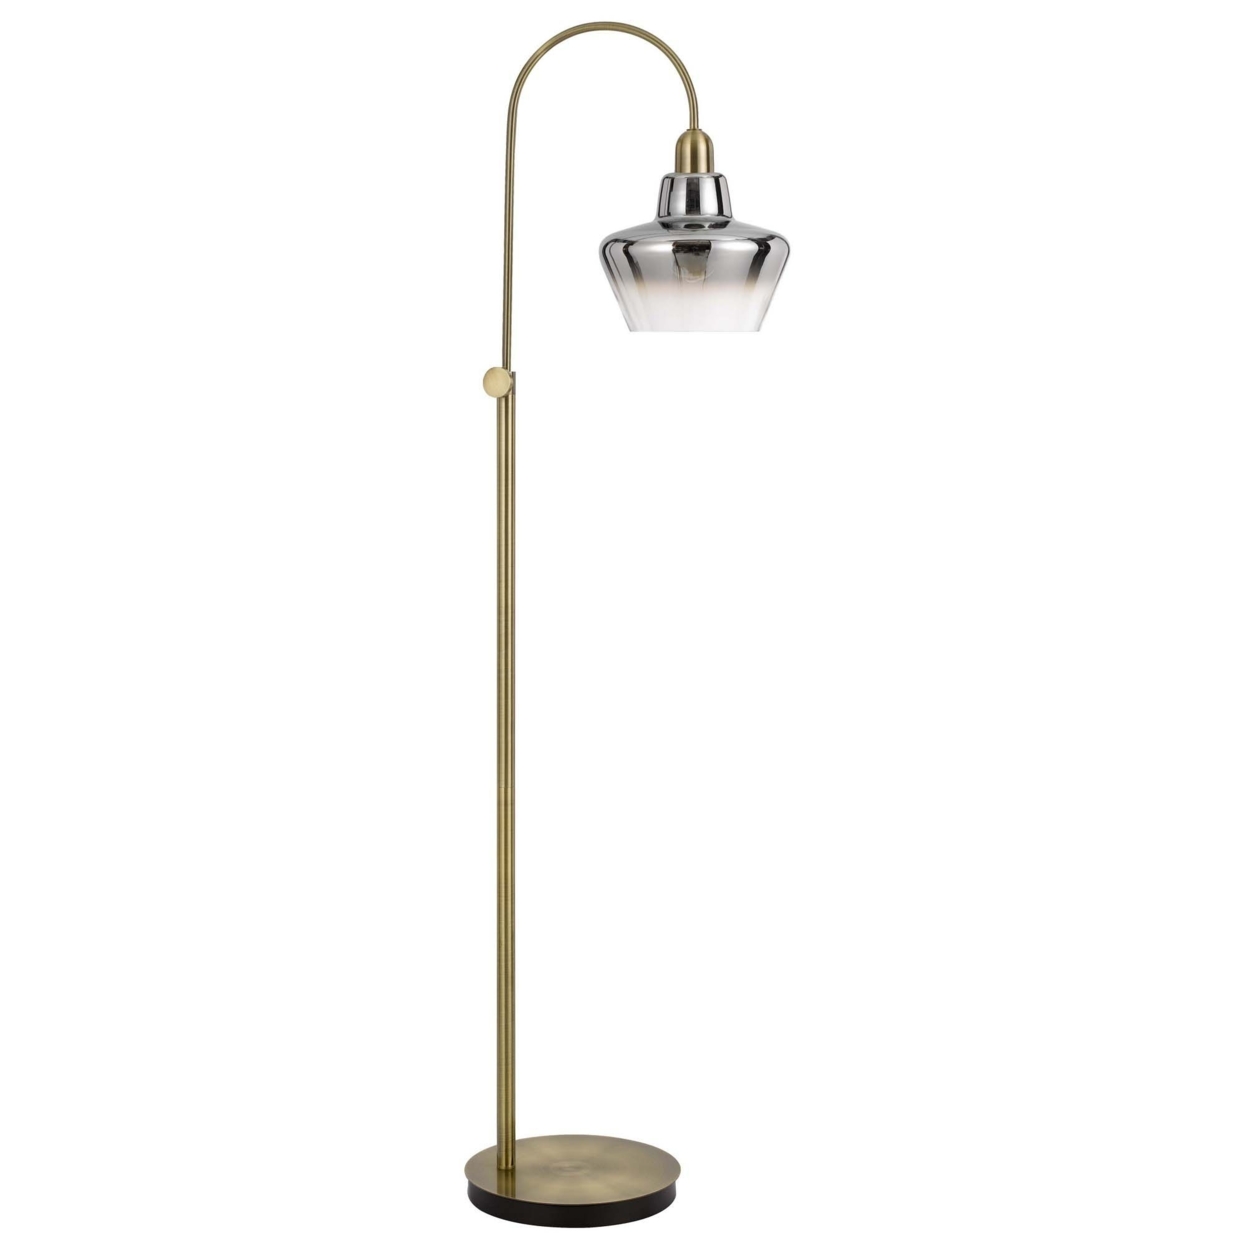 Floor Lamp With Glass Shade And Arc Metal Frame, Brass- Saltoro Sherpi